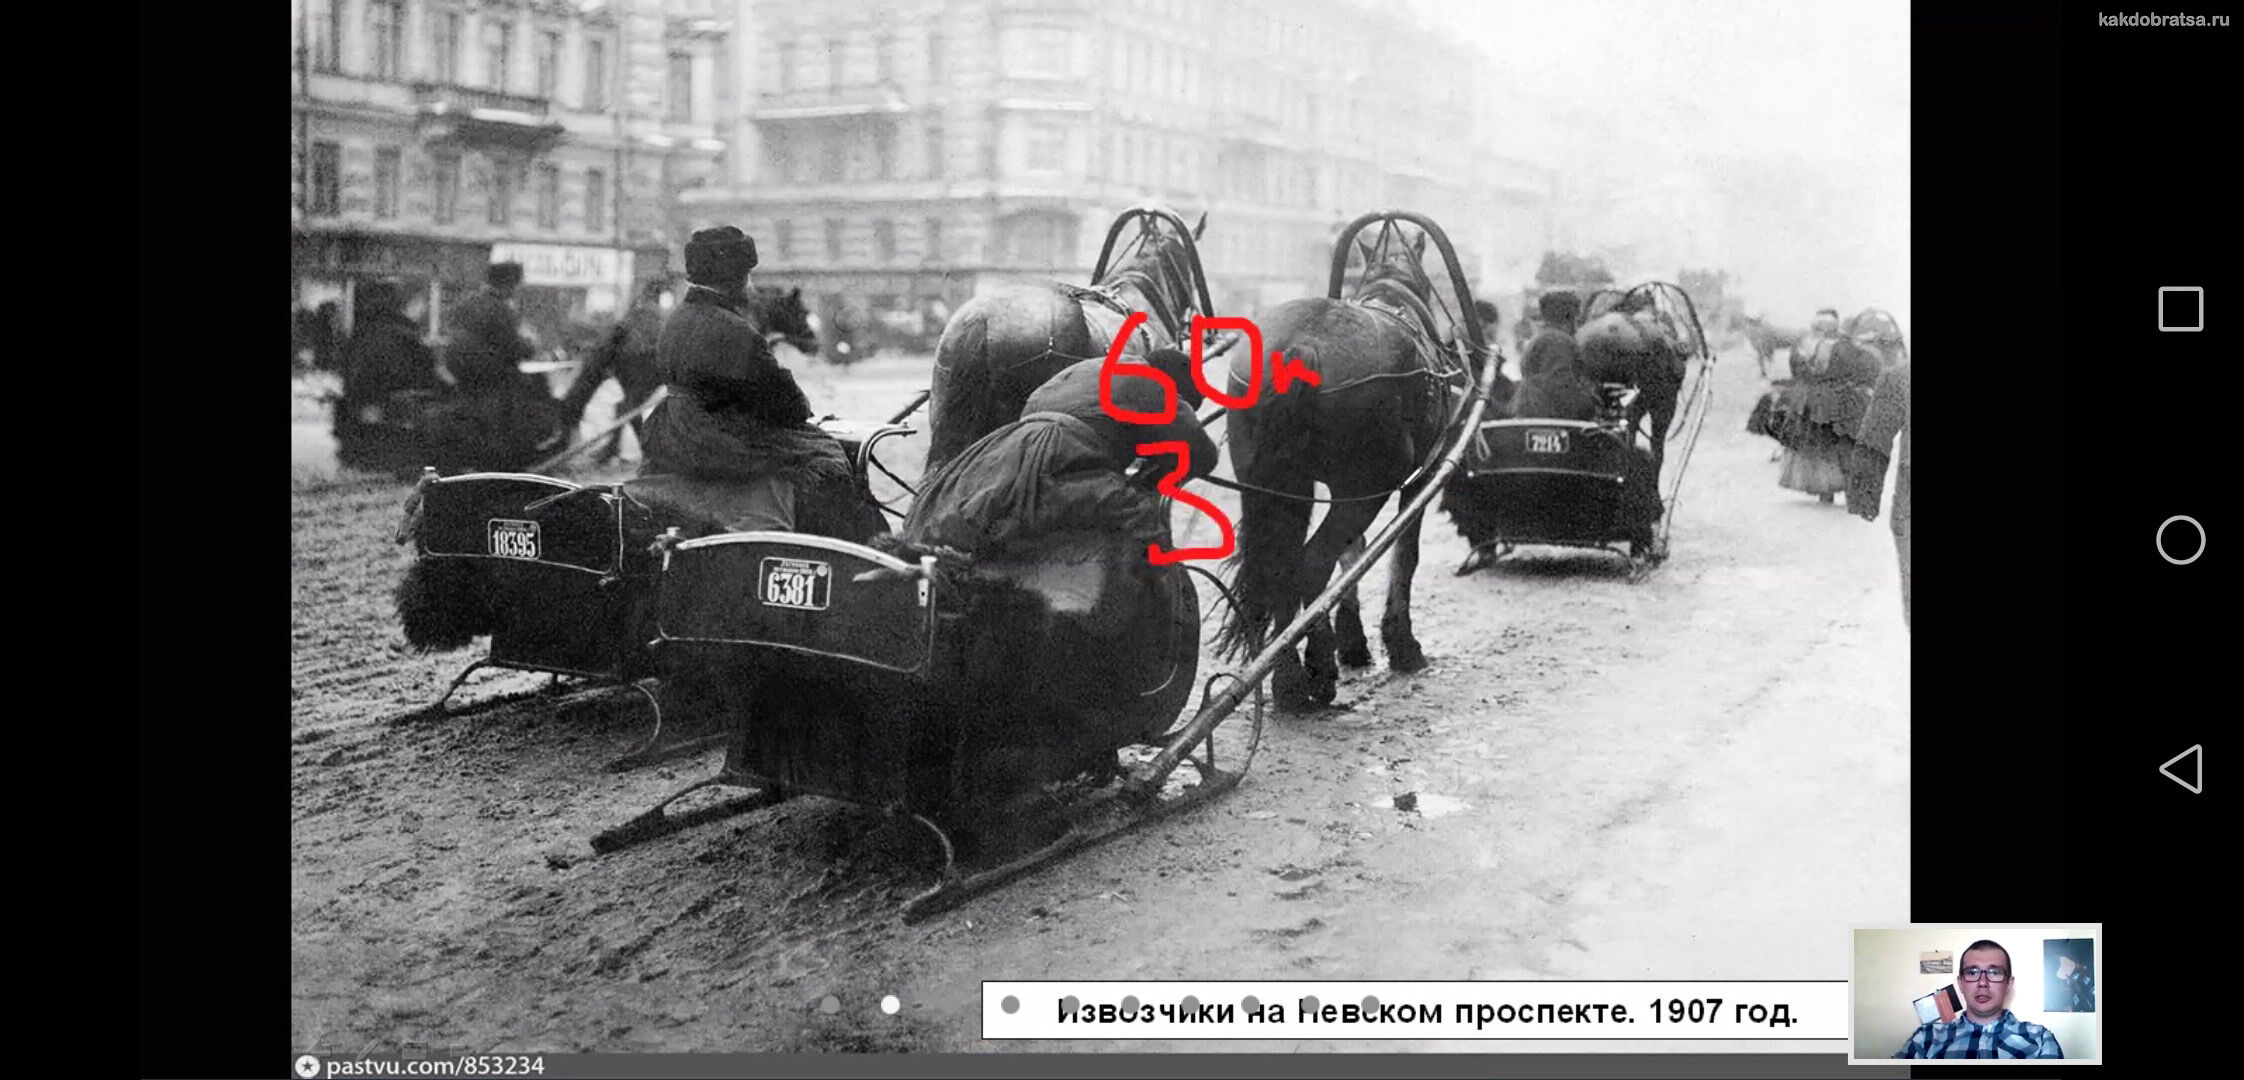 Перевозки на лошадях в дореволюционном Ленинграде